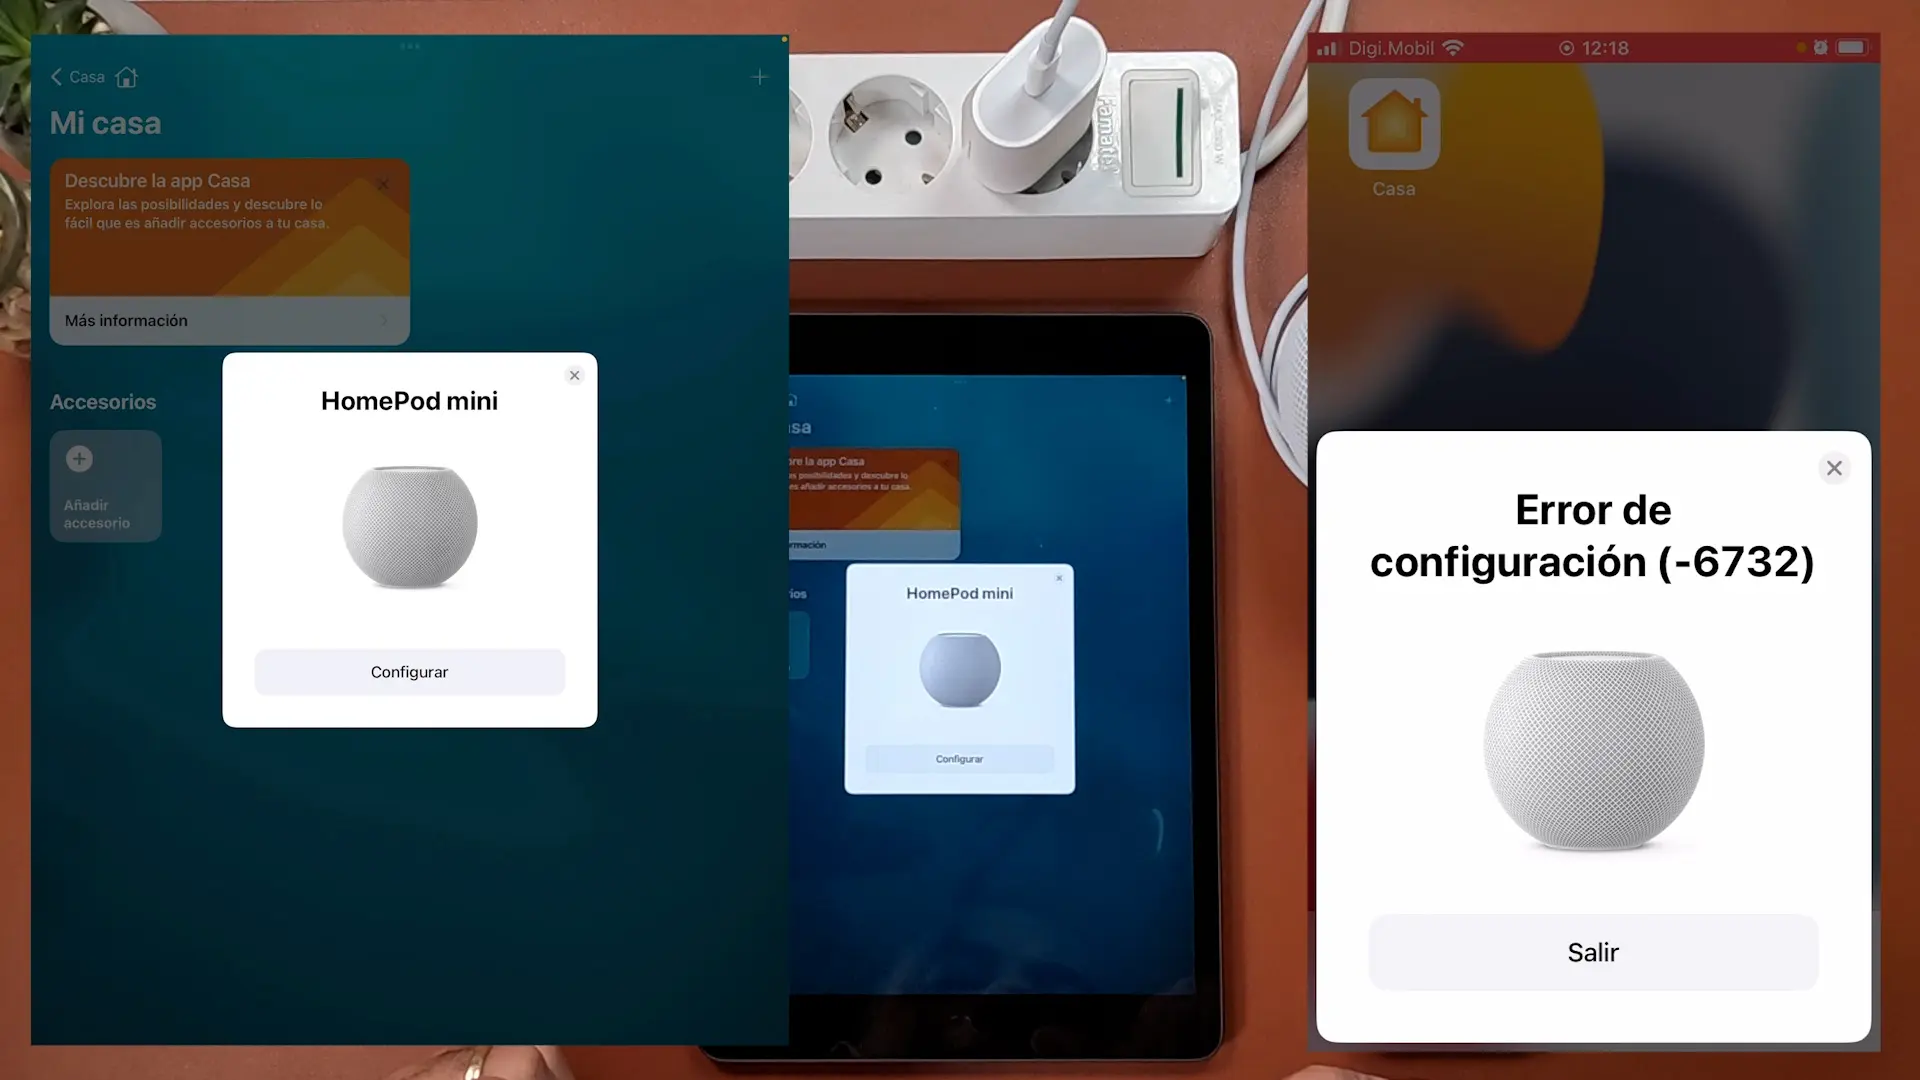 Emparejamiento del HomePod mini con el iPhone o iPad vía Bluetooth